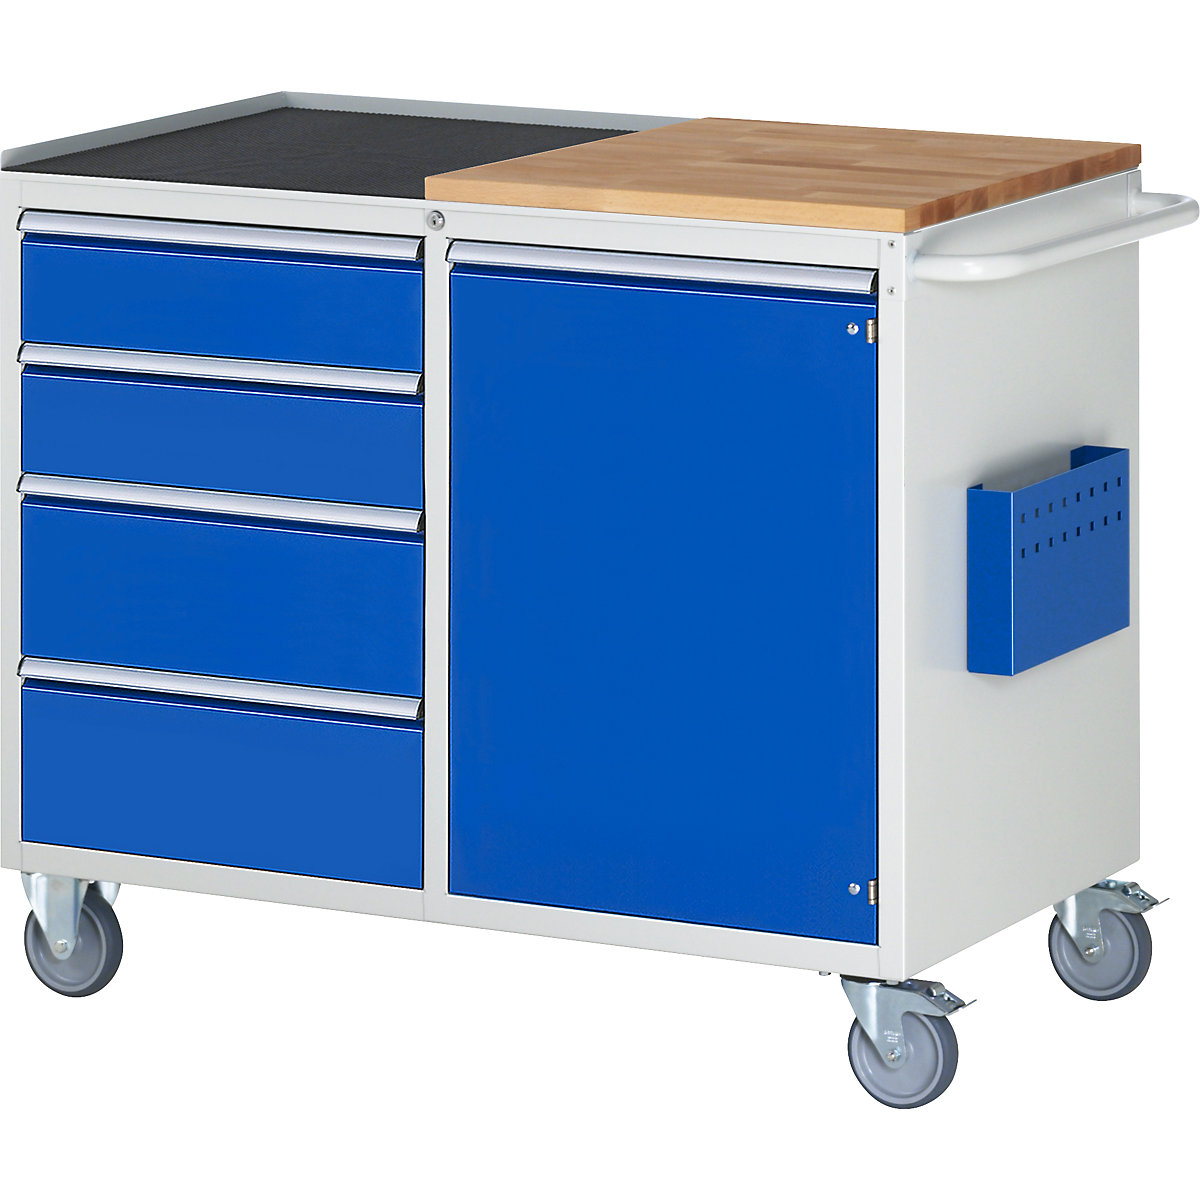 RAU Kompaktwerkbänke, fahrbar, 4 Schubladen, 1 Tür, Arbeitsfläche Holz / Metall, lichtgrau / enzianblau